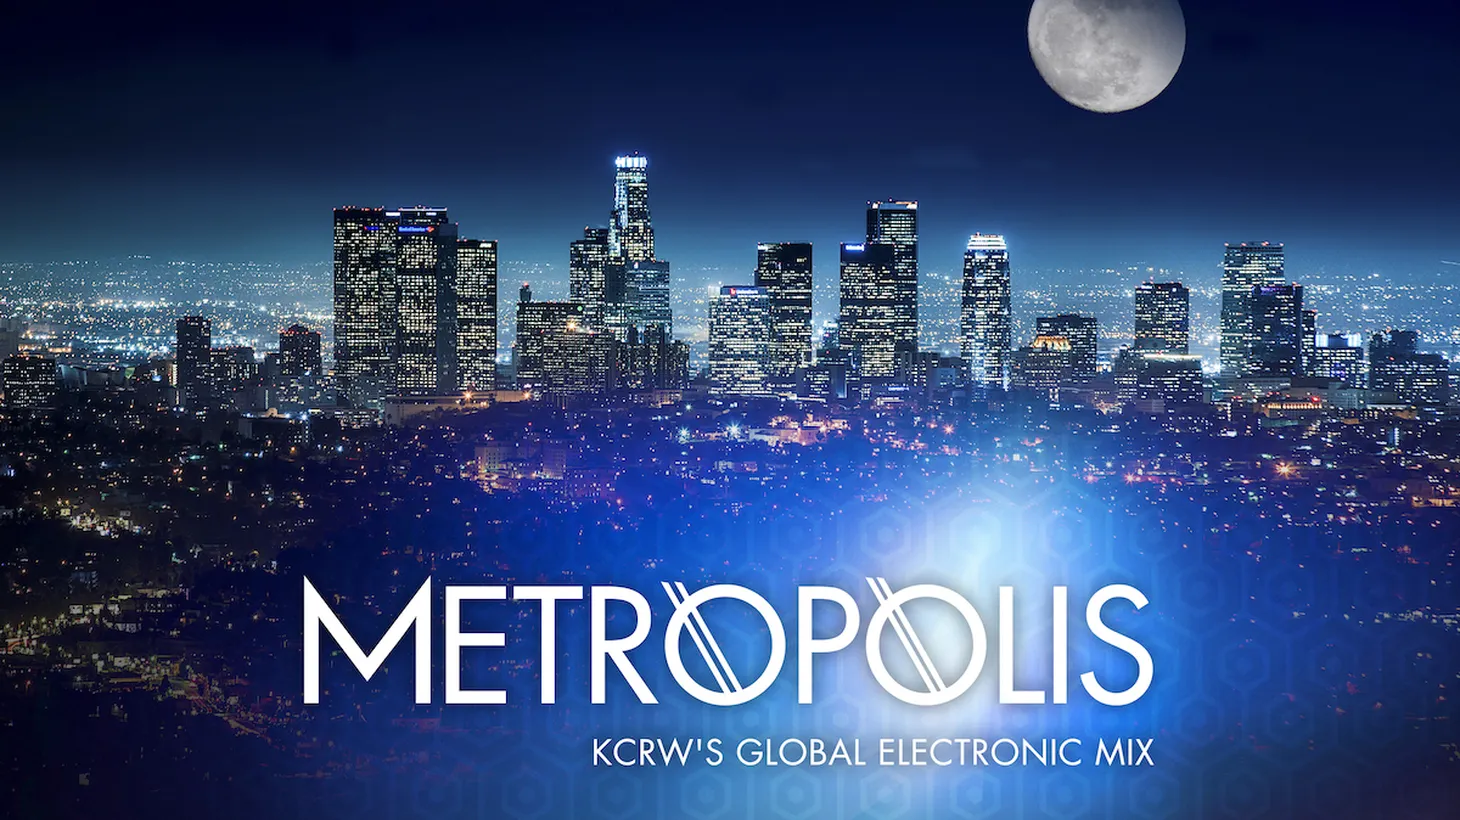 Metropolis playlist, November 28, 2020.